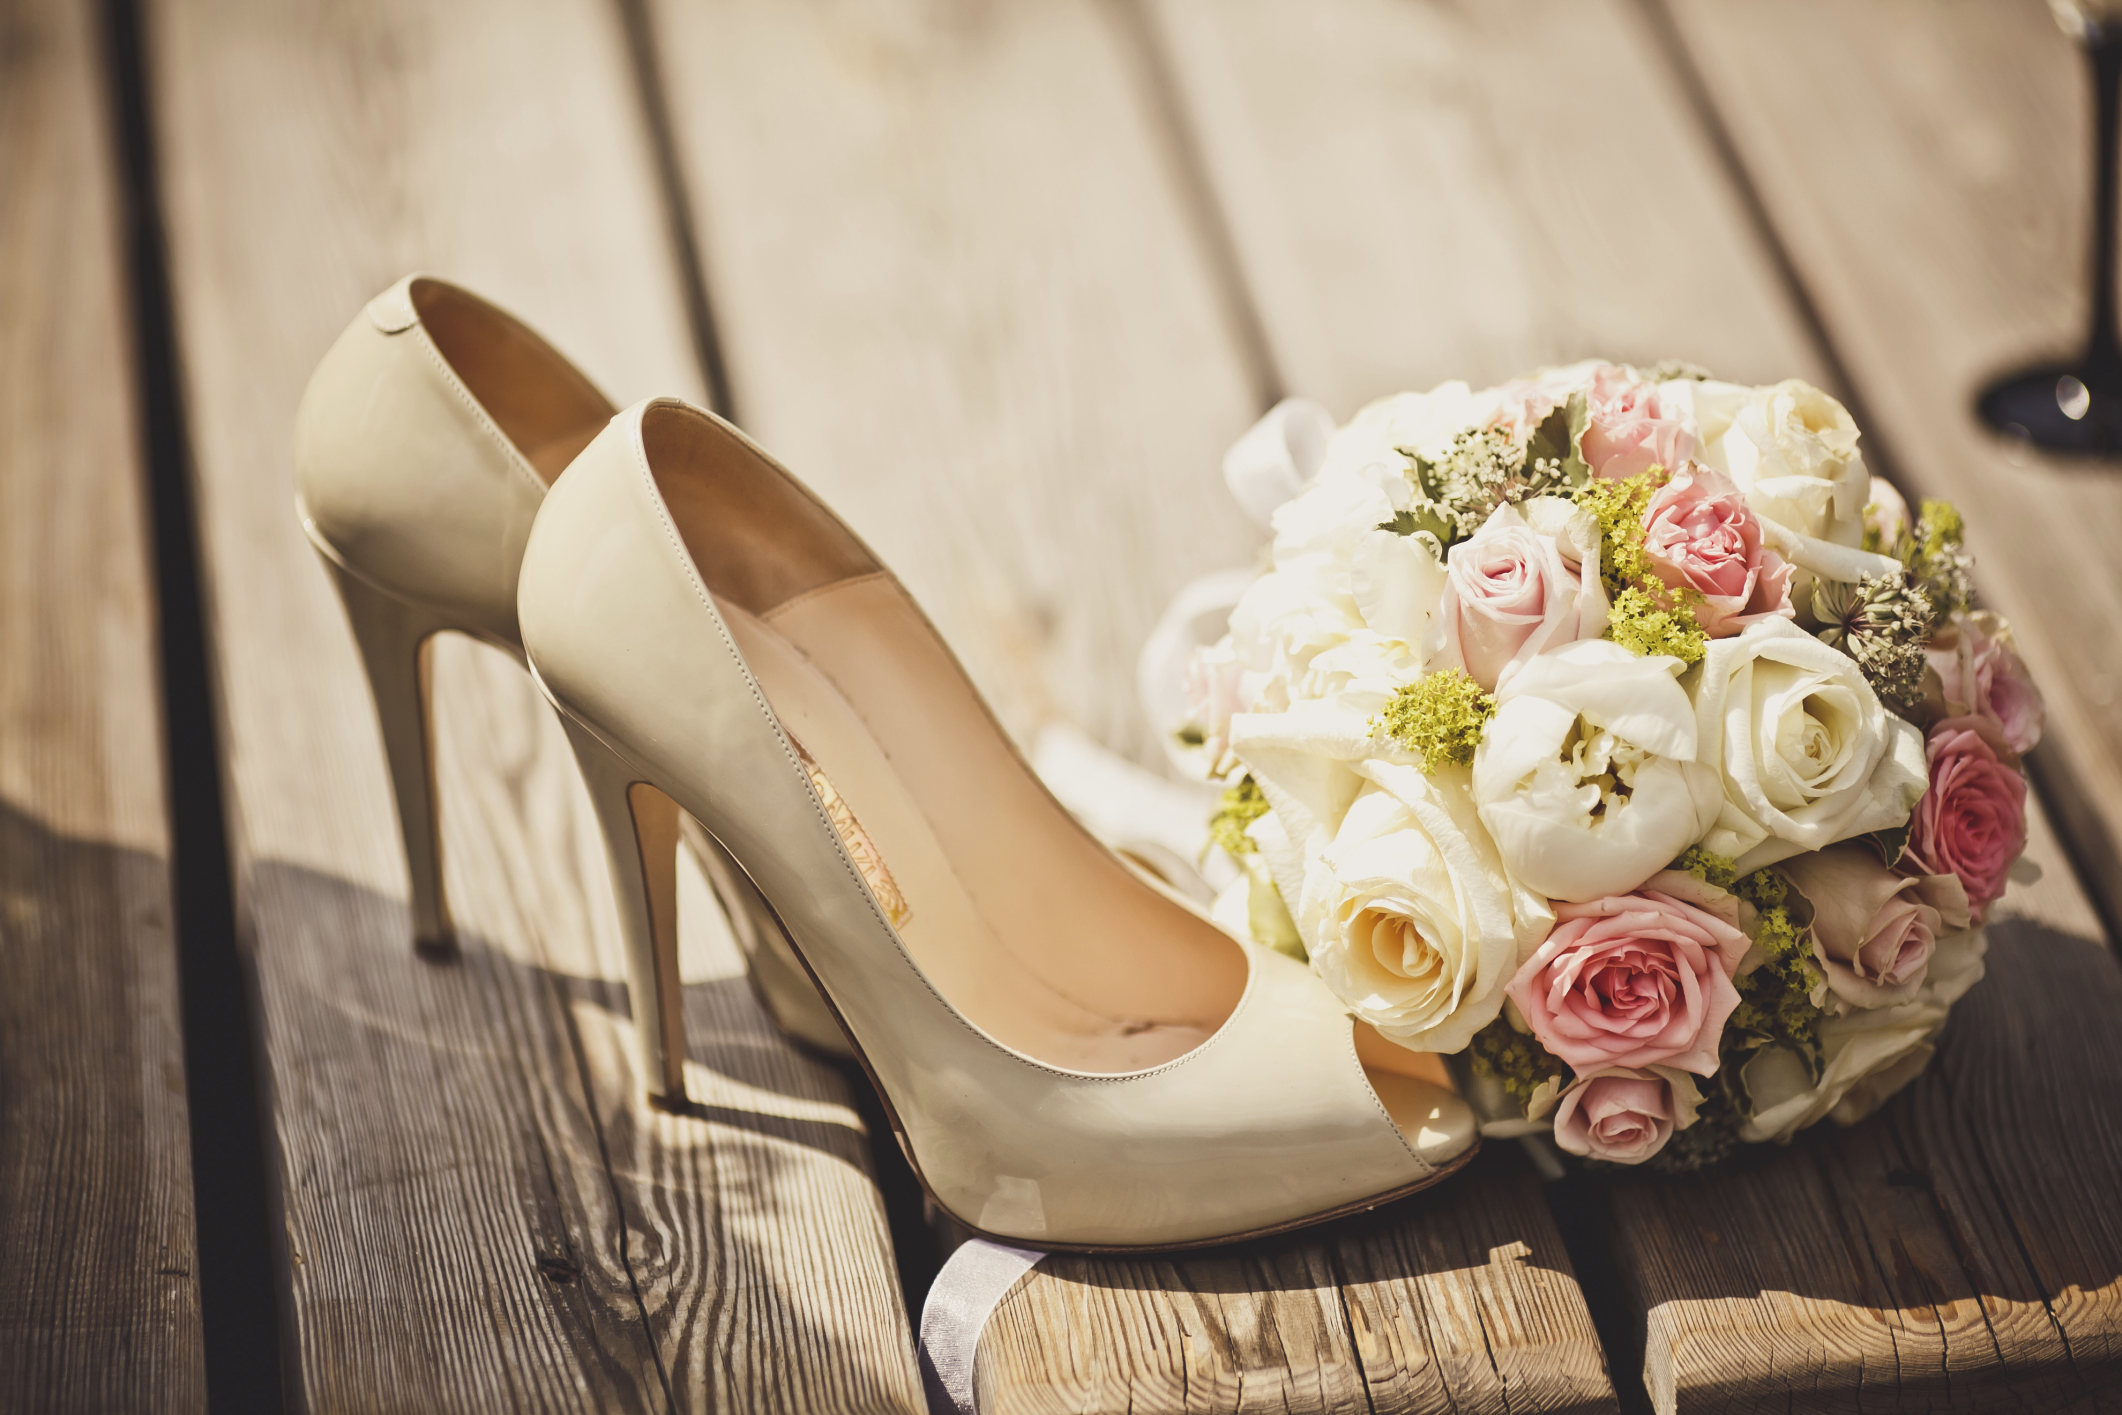 اصول مهم در انتخاب کفش عروس